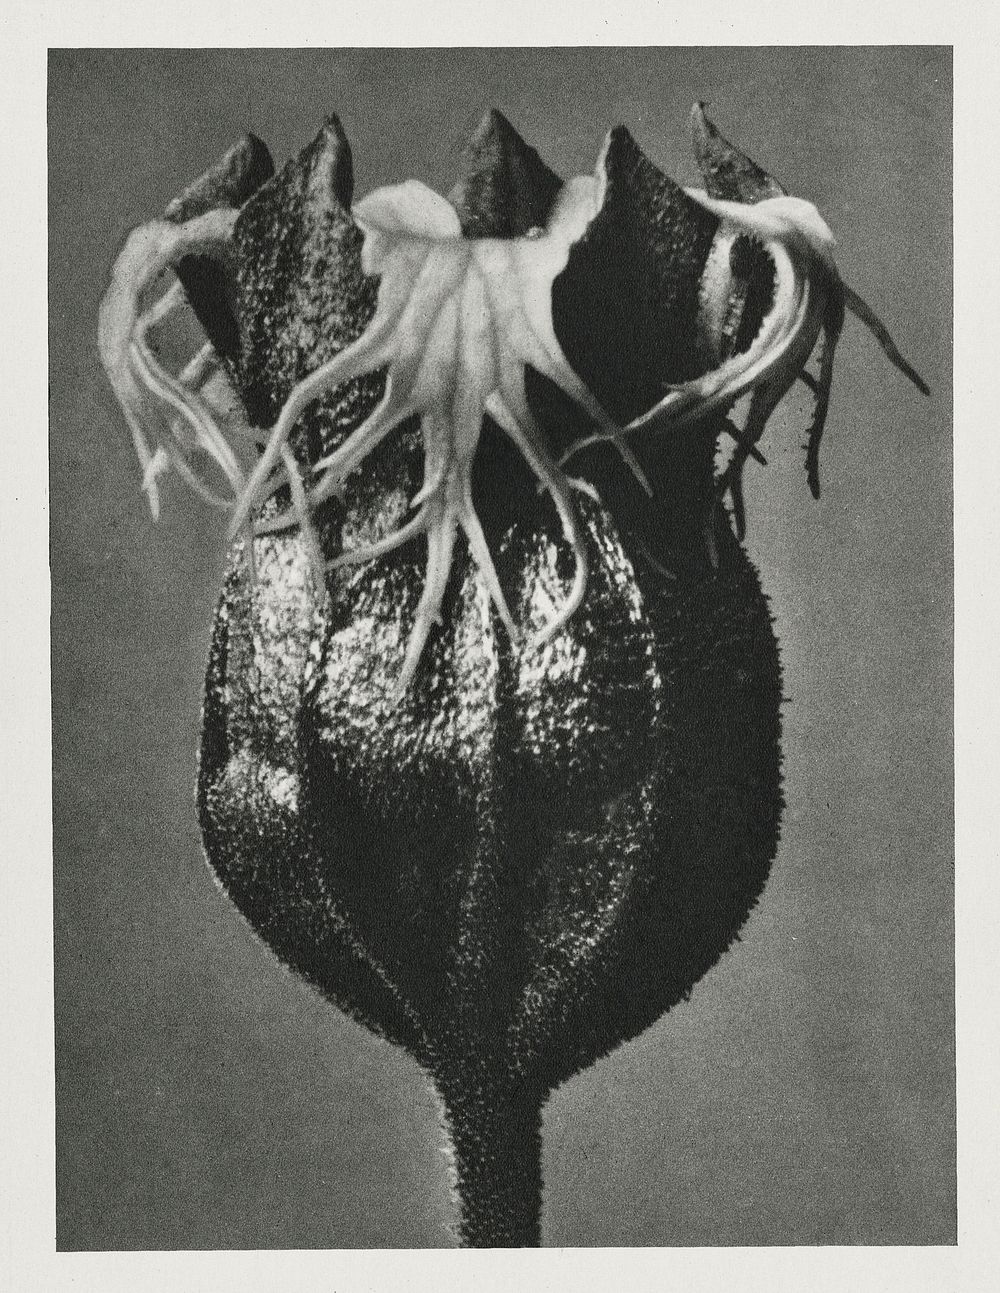 Tellima randiflora (Fringe Cups) enlarged 25 times from Urformen der Kunst (1928) by Karl Blossfeldt. Original from The…